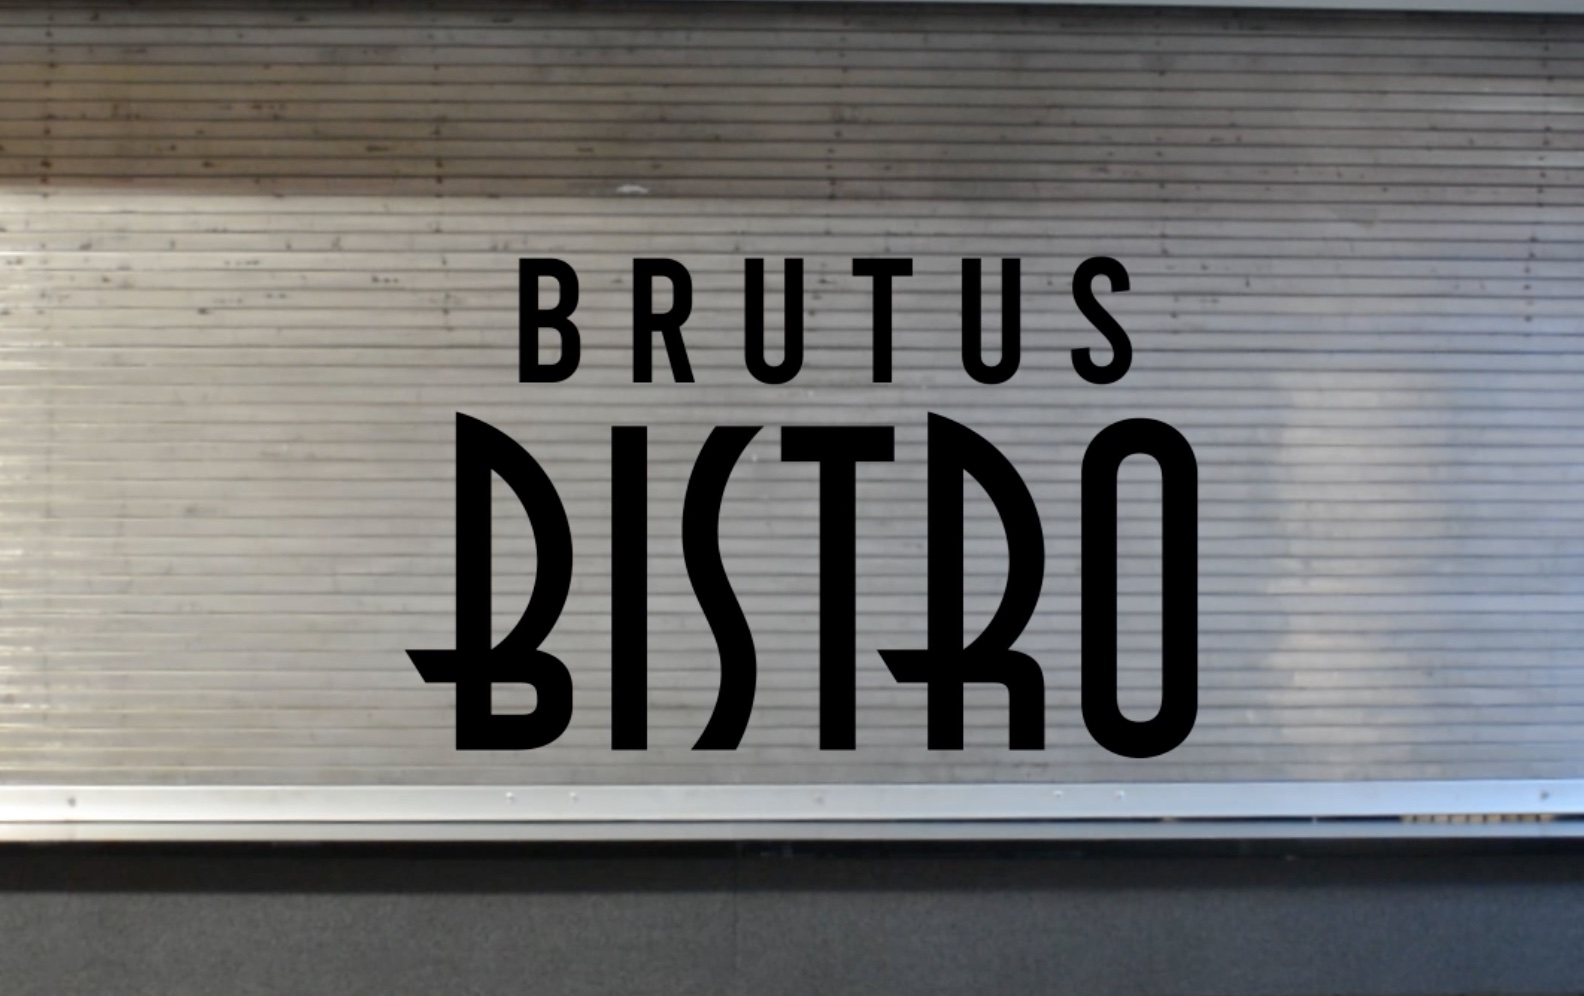 Brutus Bistro 